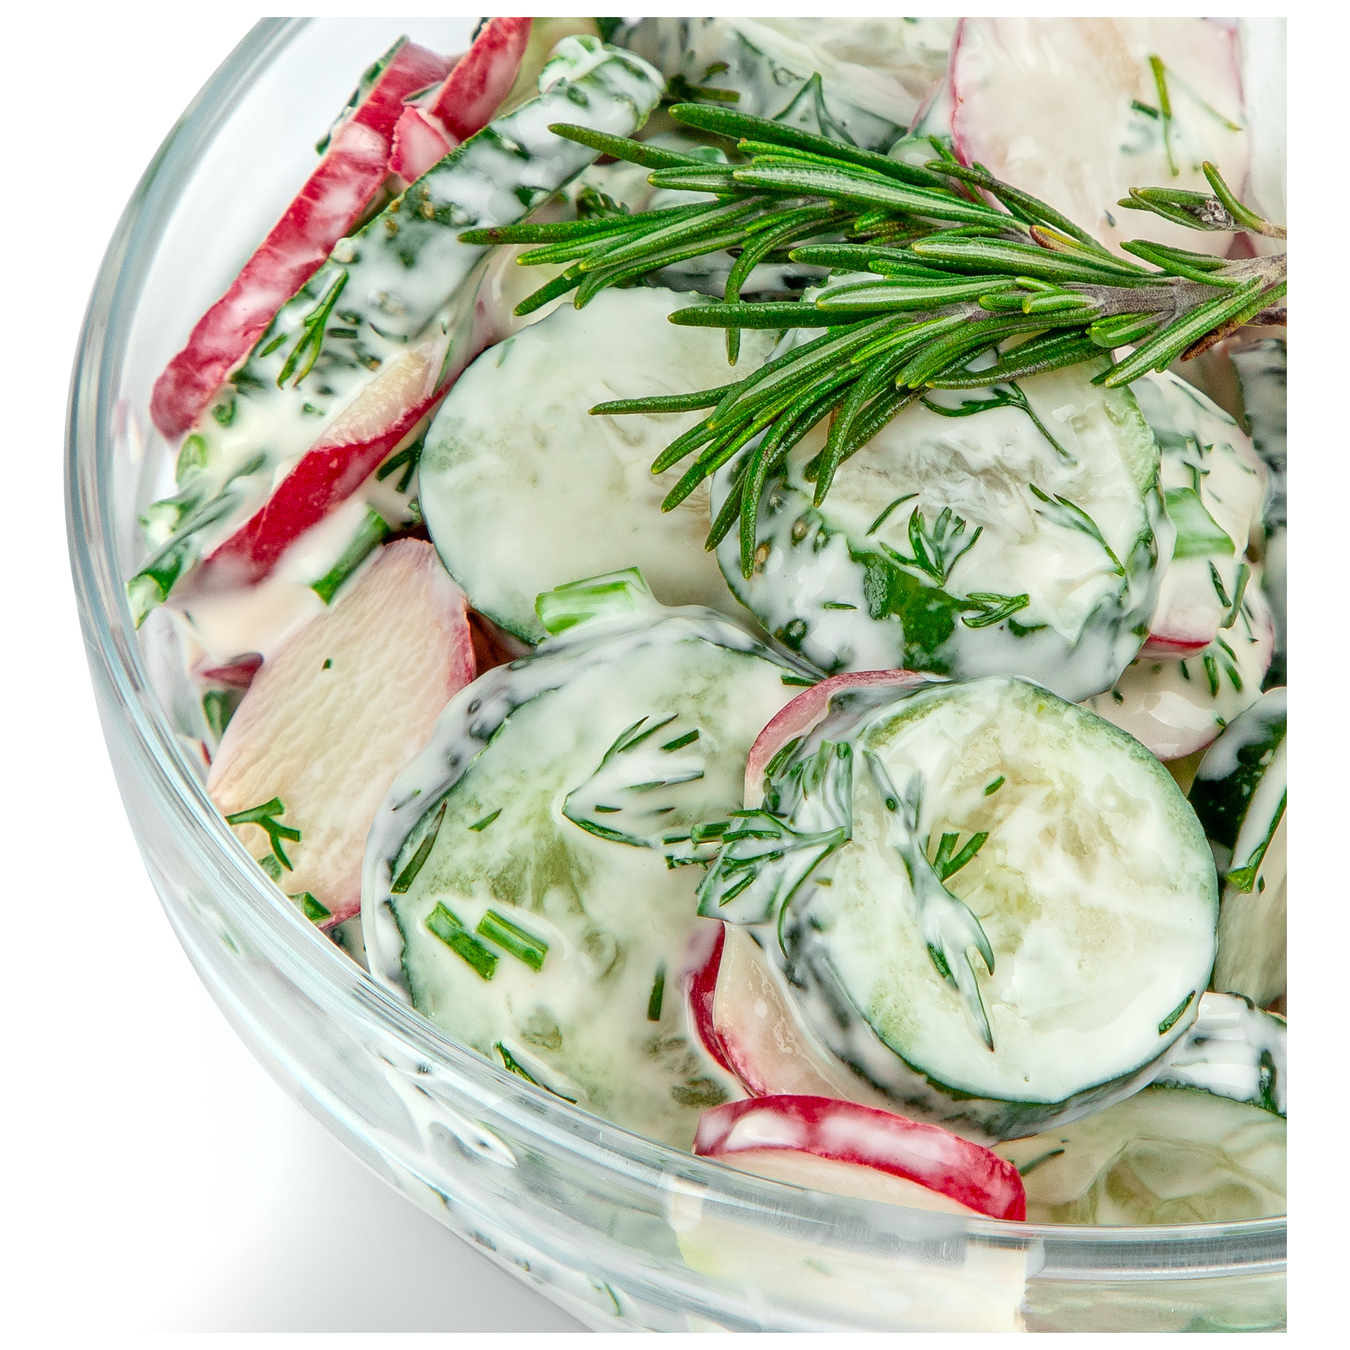 Radish and cucumber salad